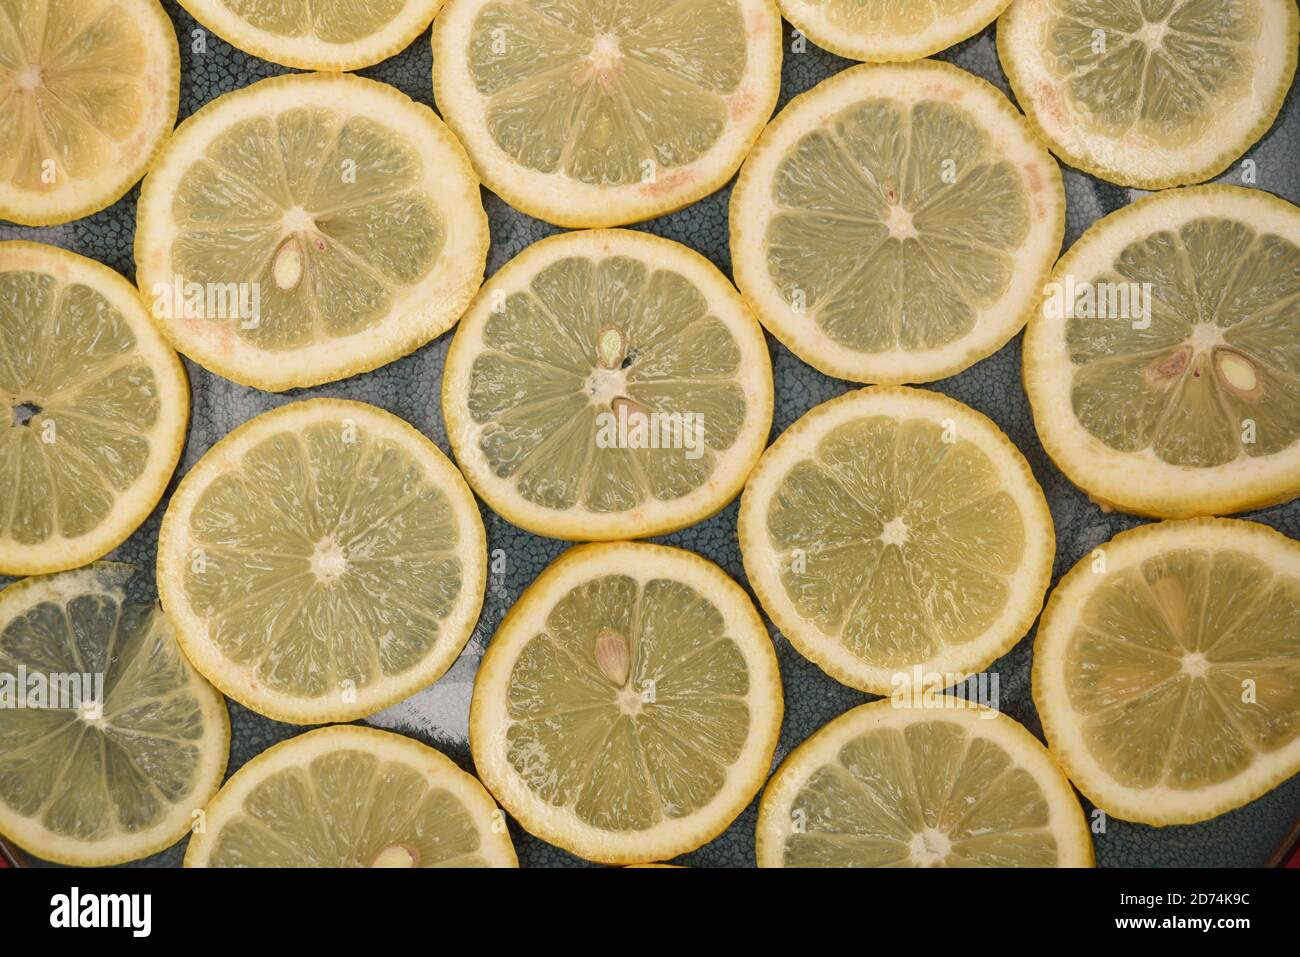 sliced of lemons on a blue plate Stock Photo